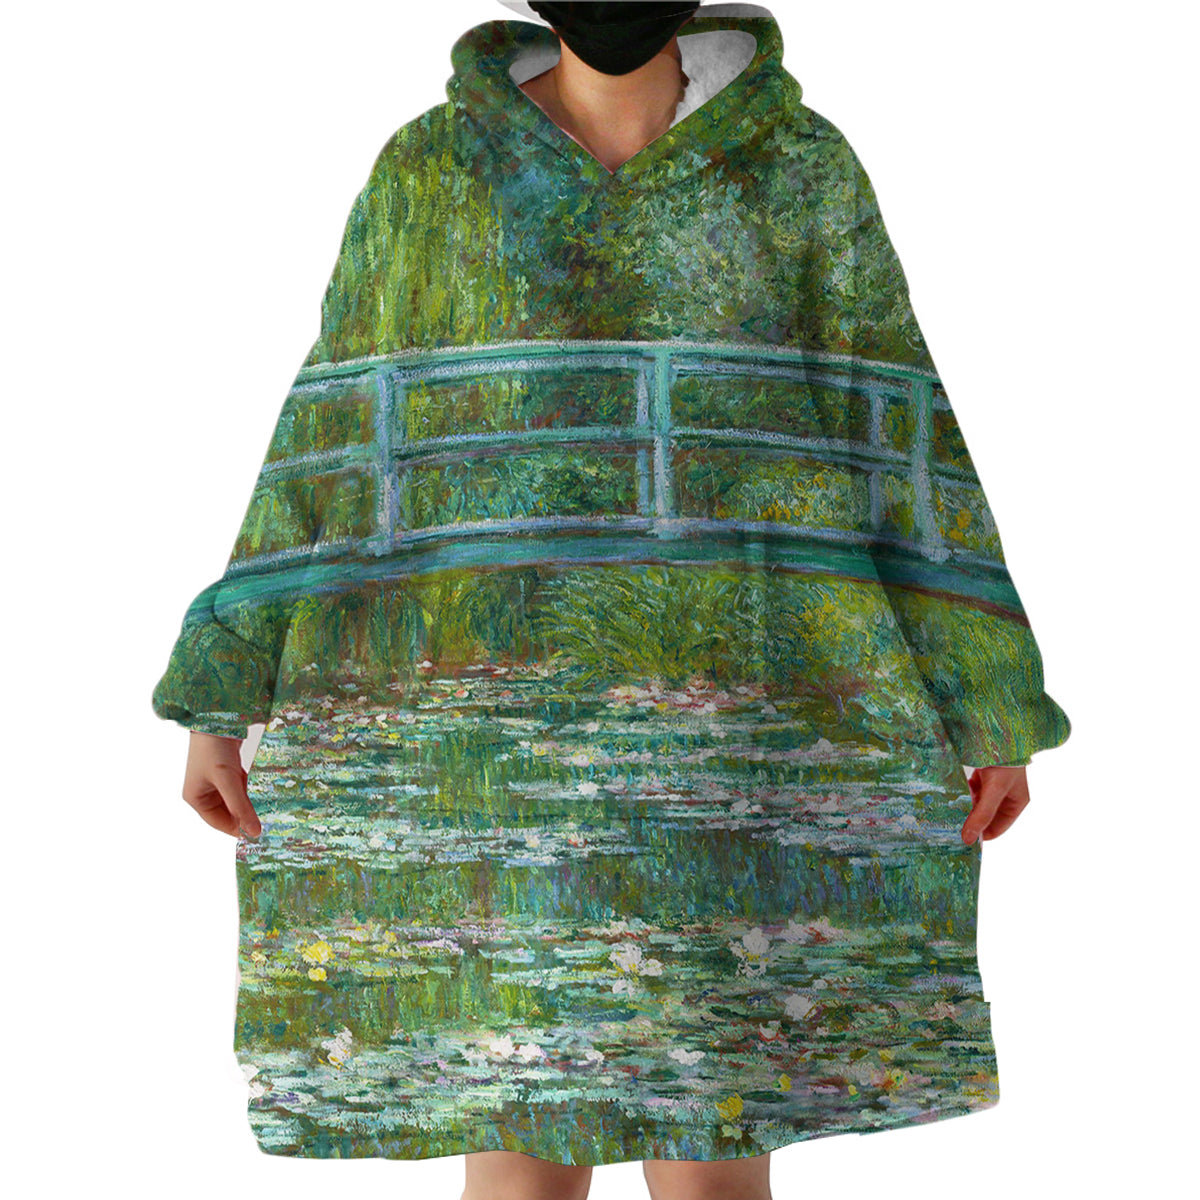 Claude Monet's Water Lily Pond Wearable Blanket Hoodie